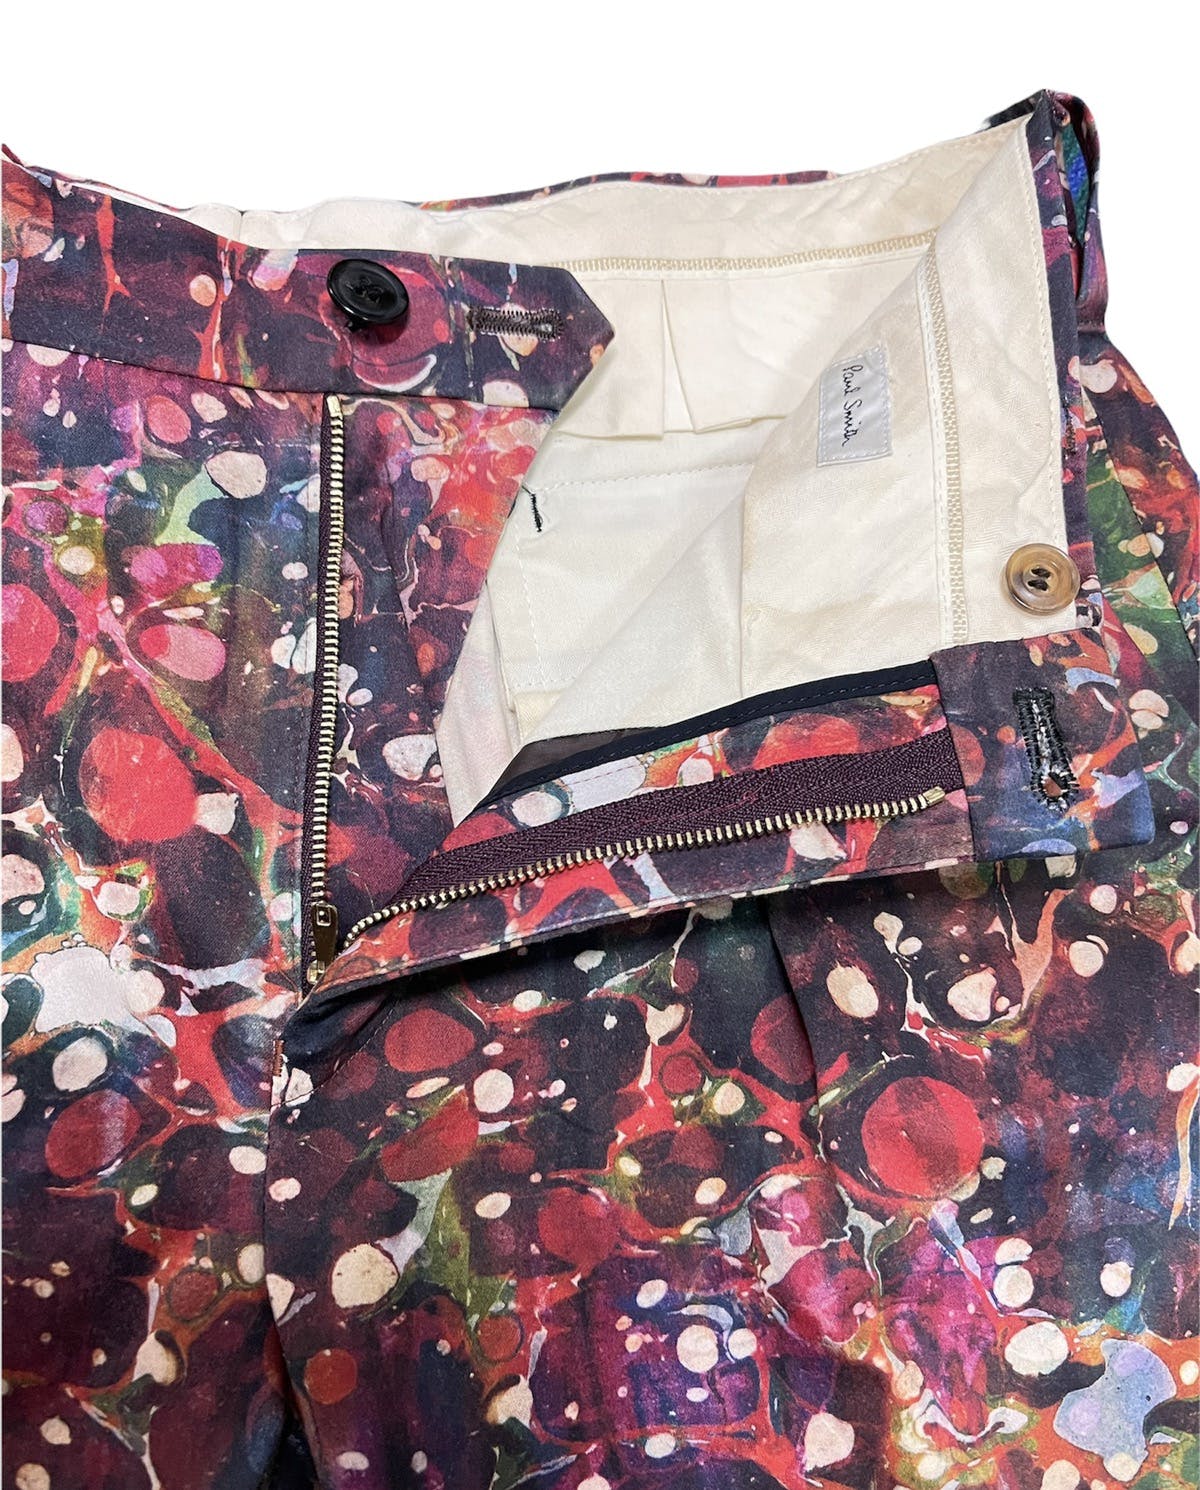 Paul smith khakis pants overprint art design - 3